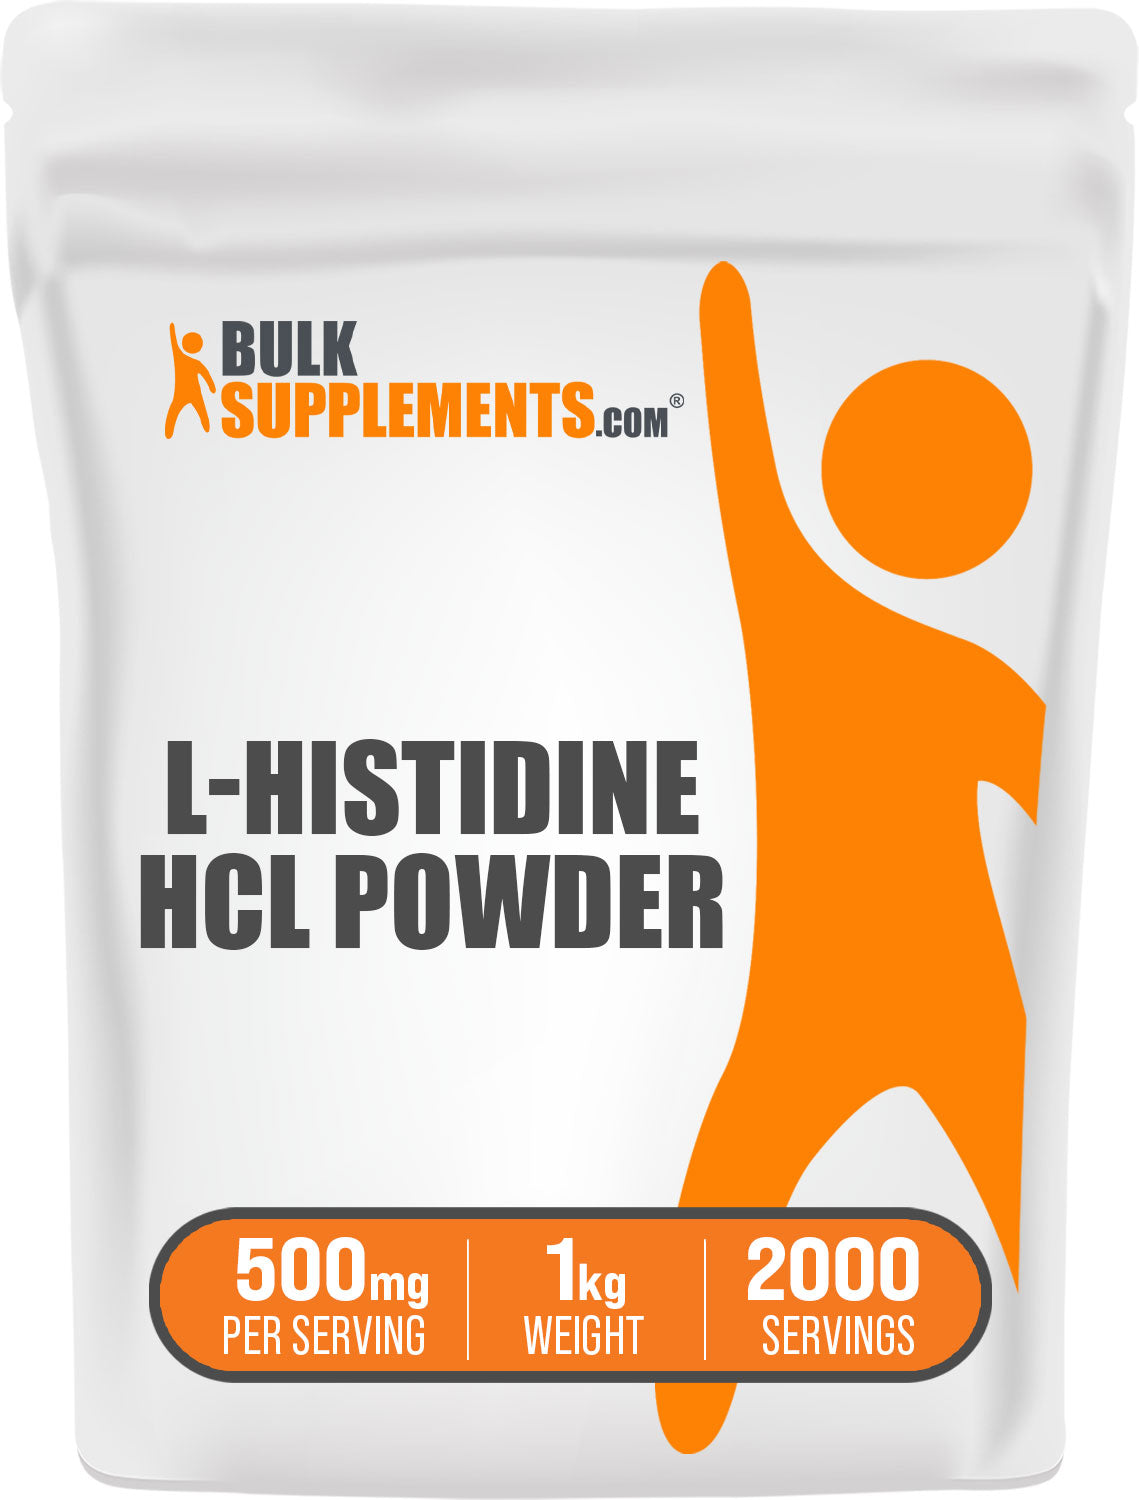 Histidine HCl Powder 1kg